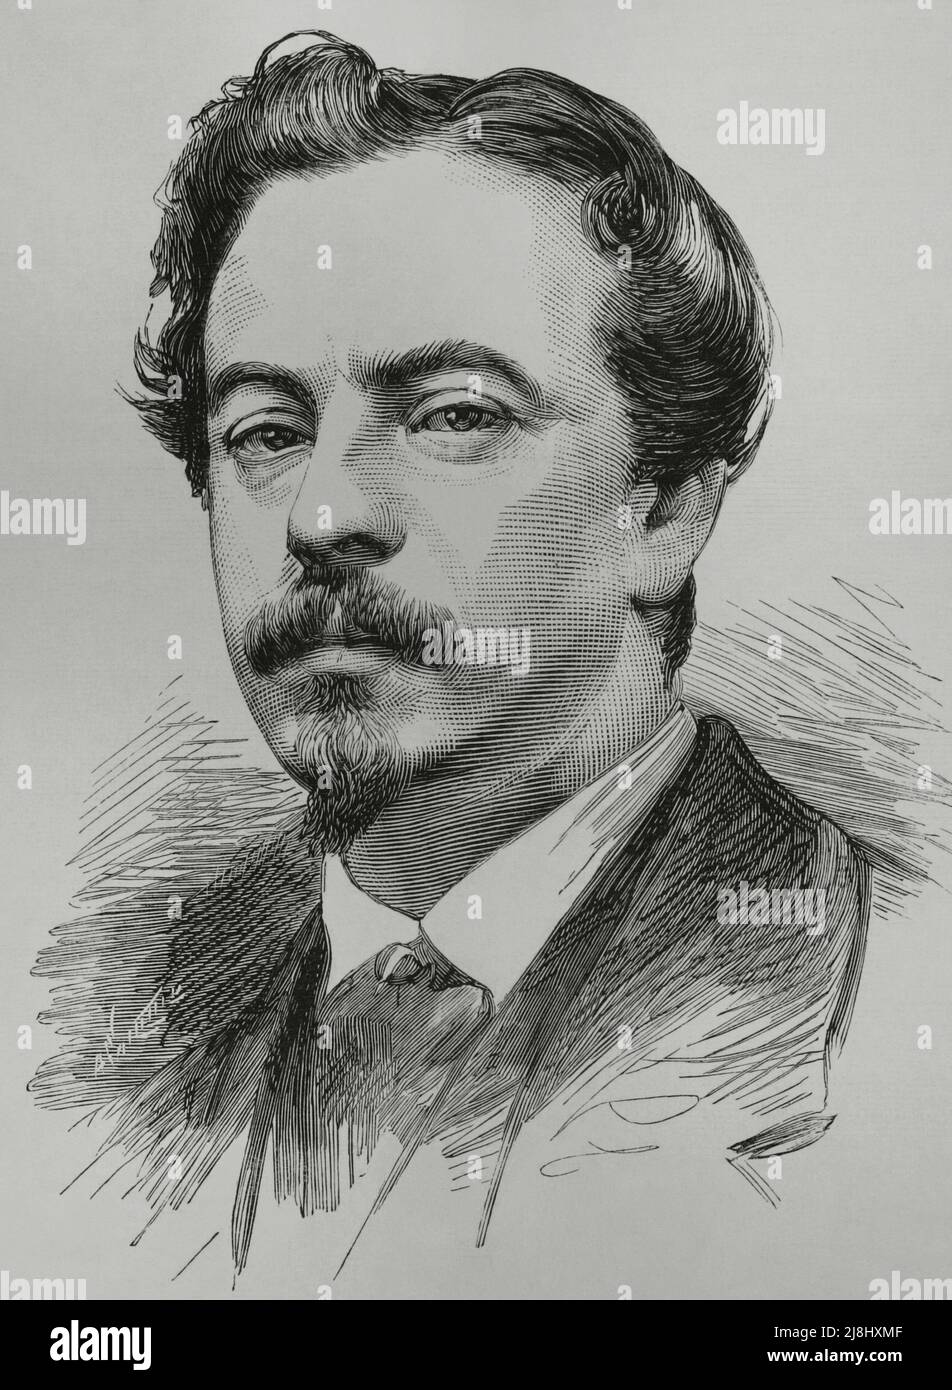 Ignacio Suarez Llanos (1830-1881). Spanish painter and illustrator of the 19th century. Portrait. Engraving, 1882. Stock Photo